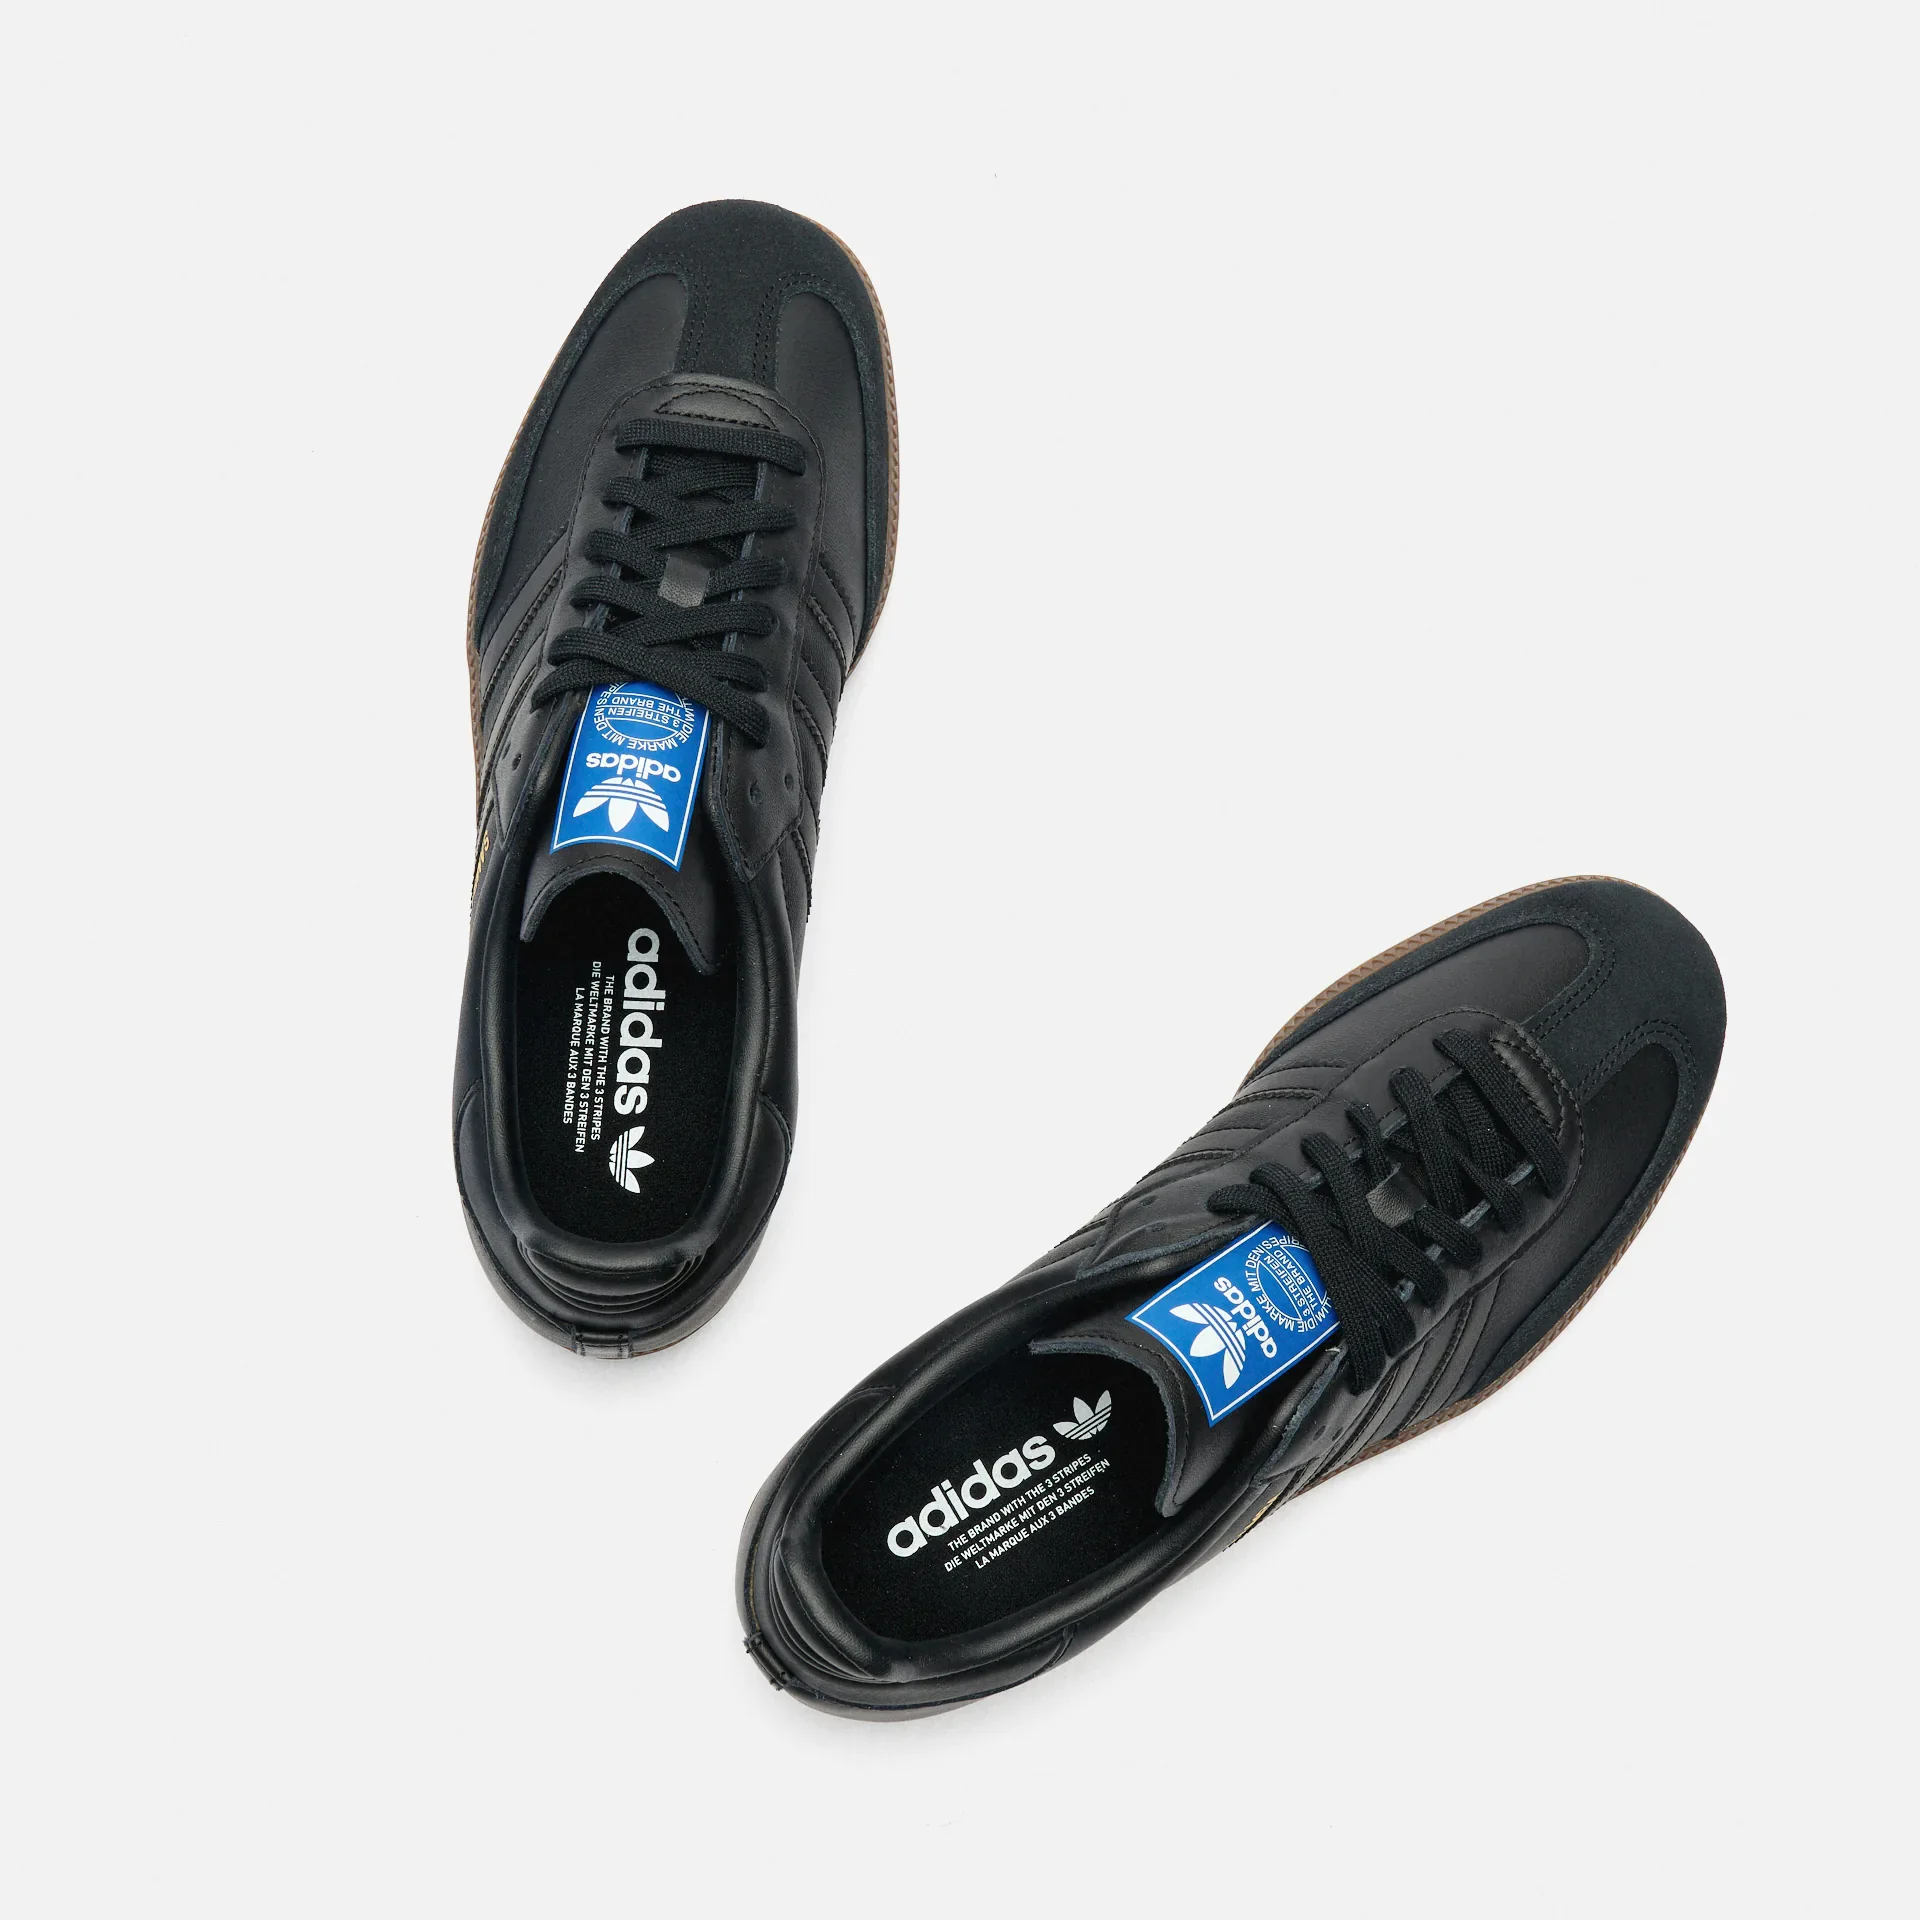 adidas Originals Sneaker Samba OG Core Black/Core Black/Gum